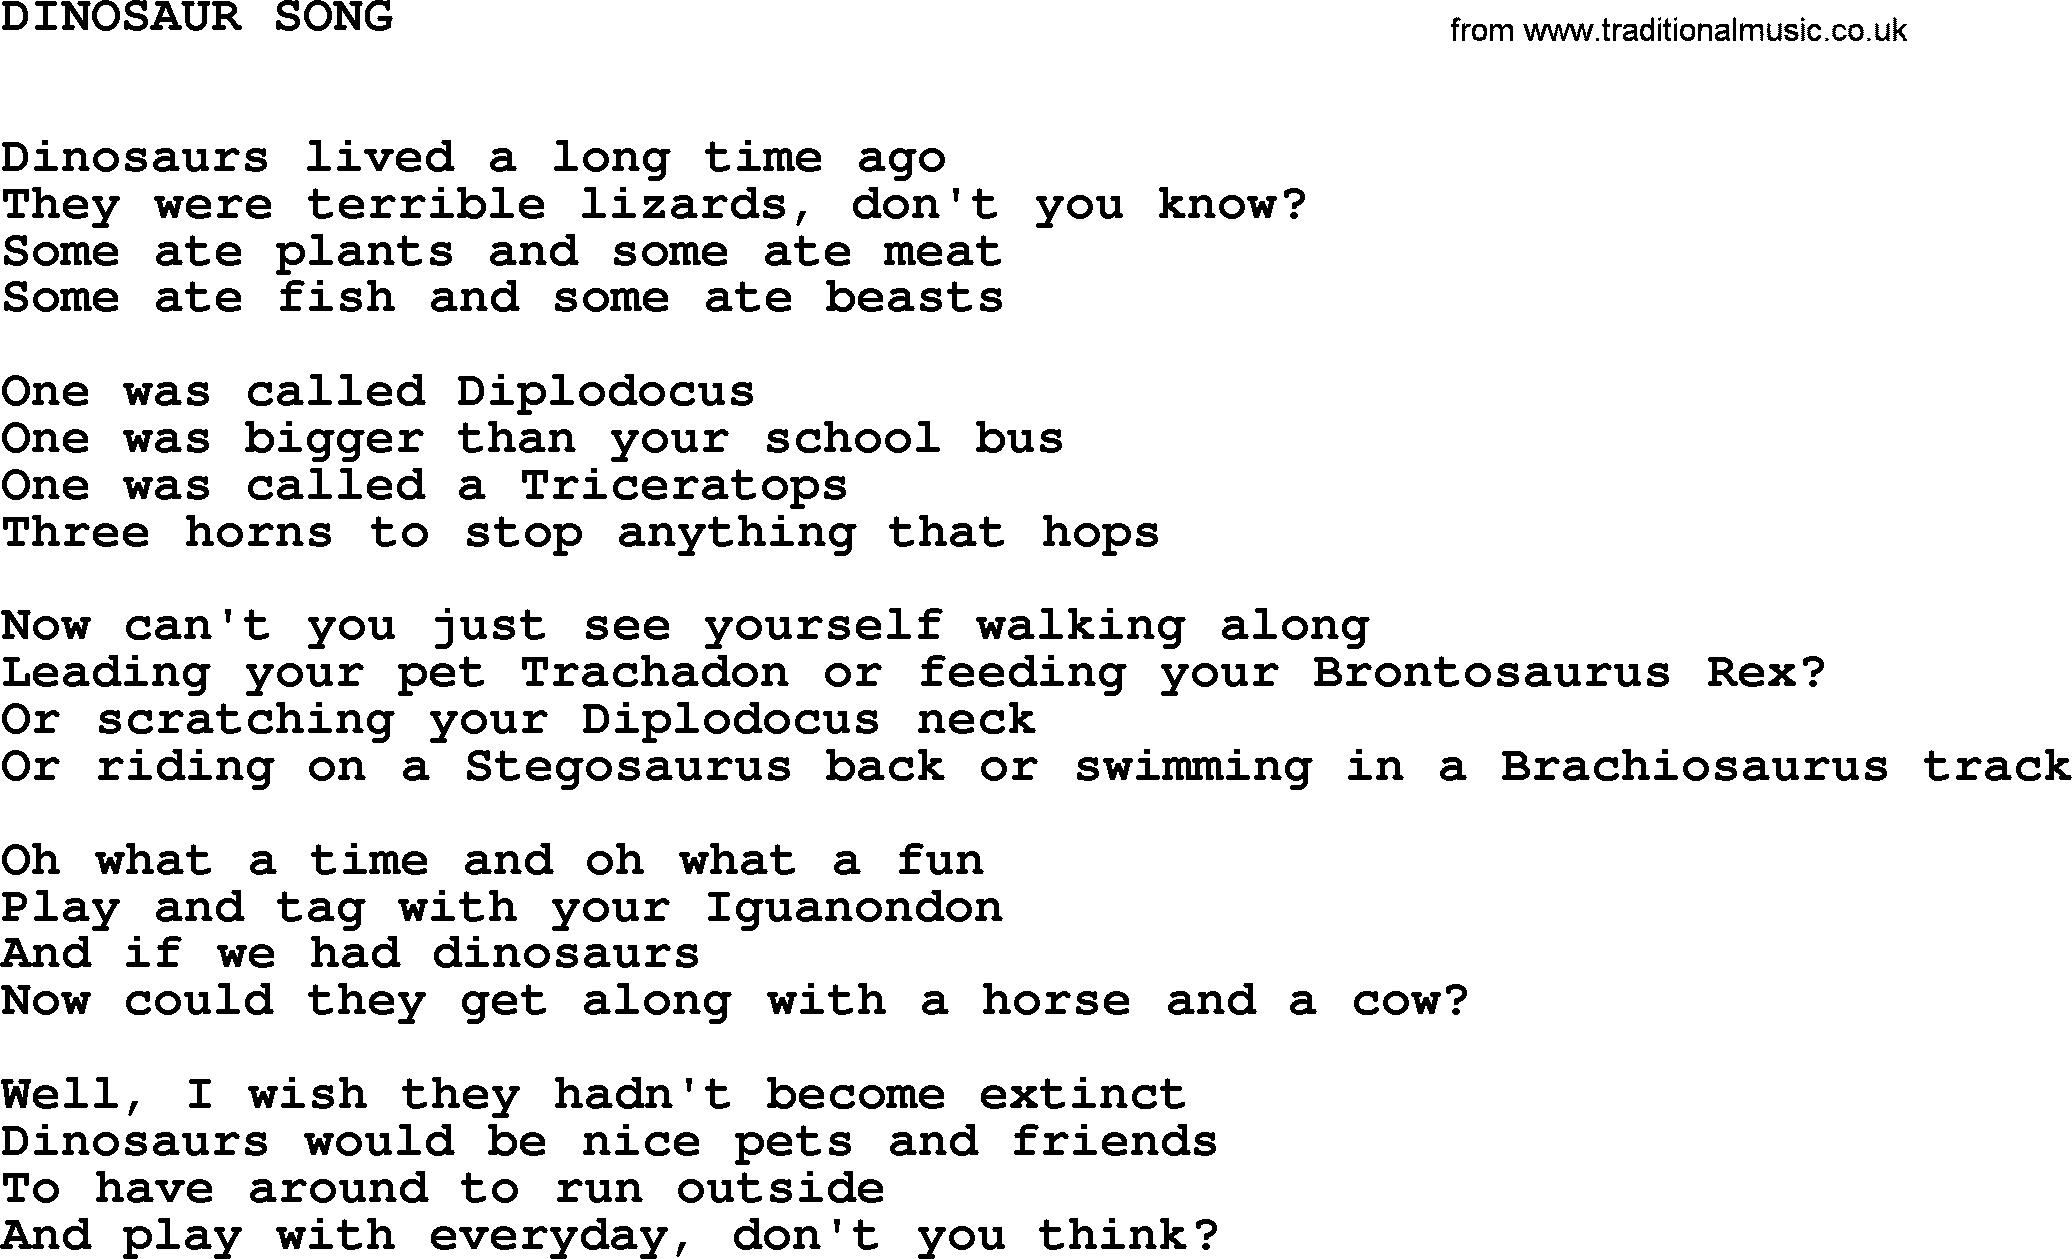 Johnny Cash song Dinosaur Song.txt lyrics